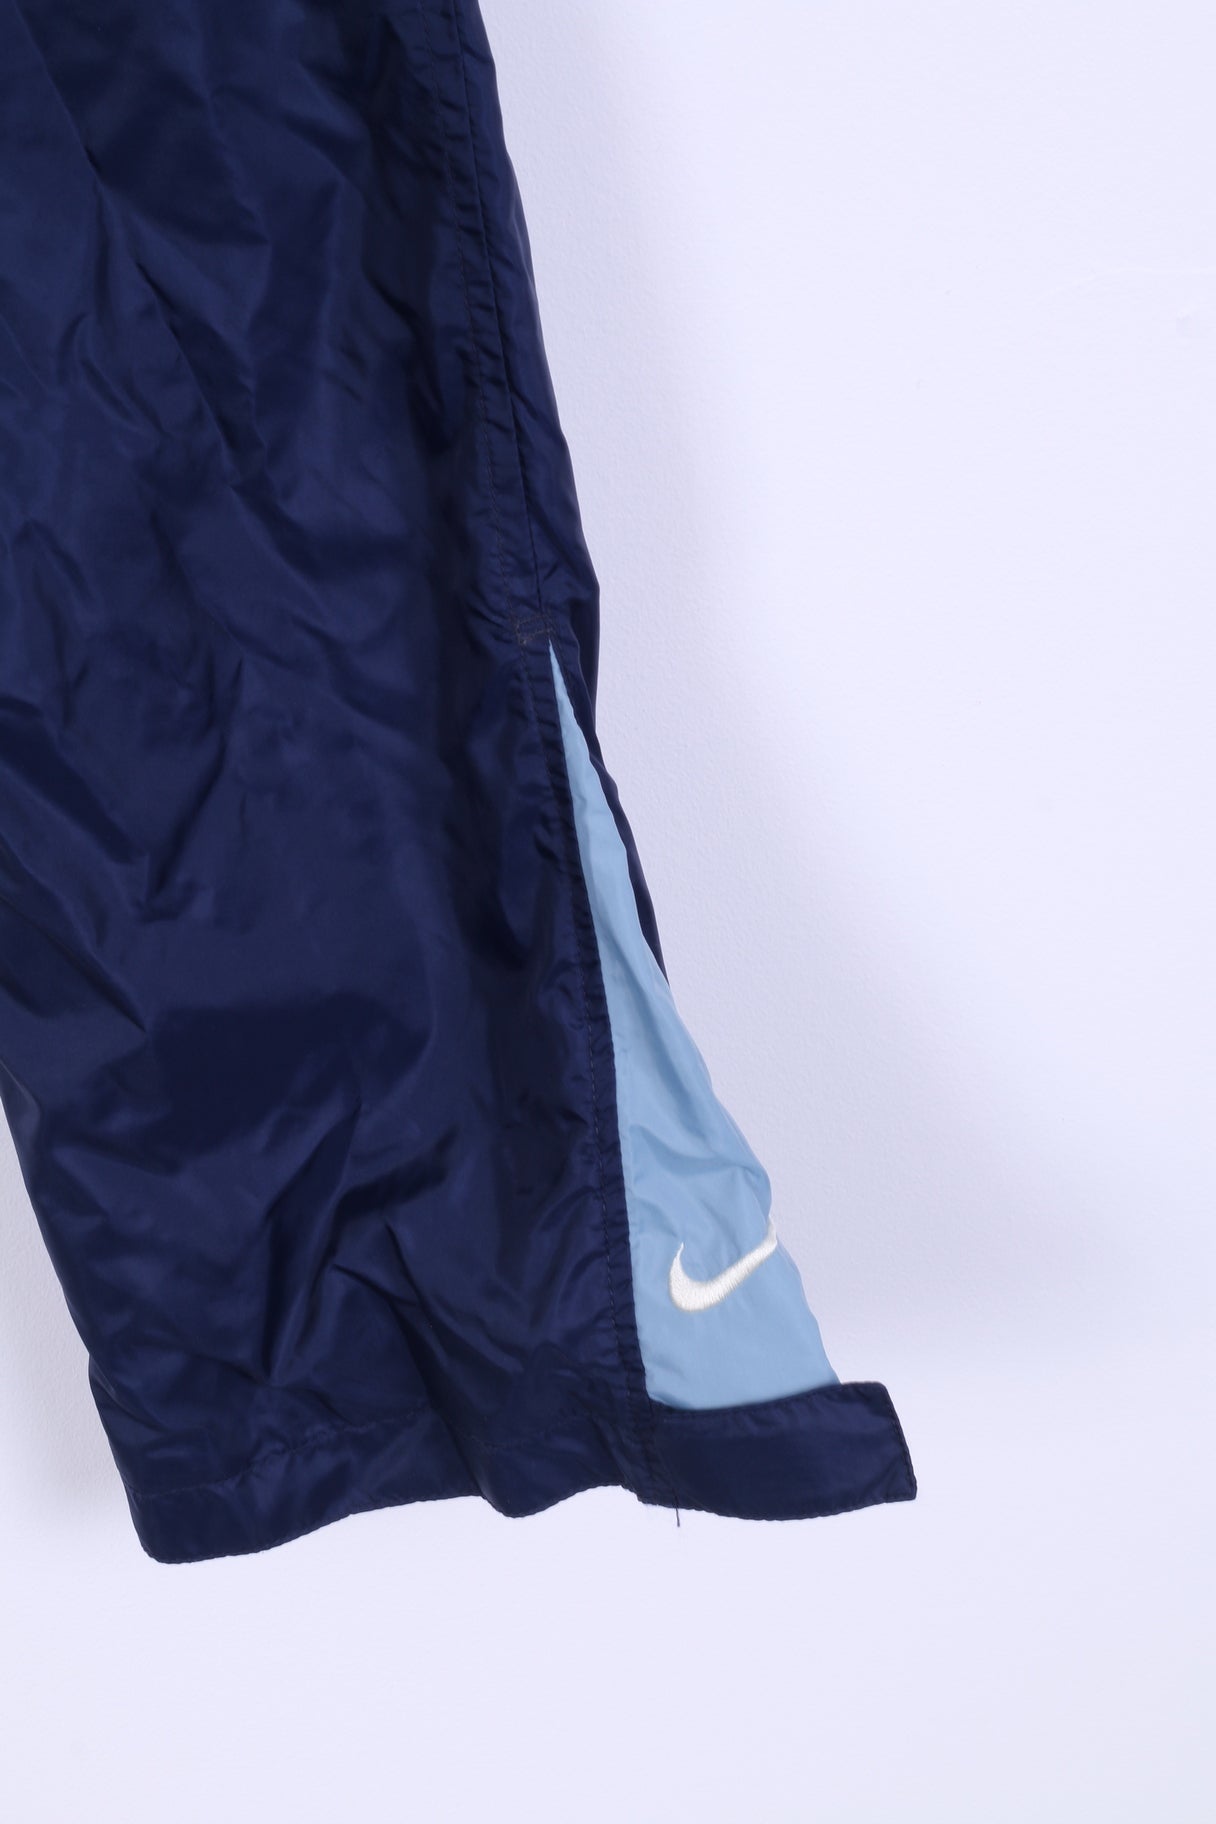 Nike Boys L 152- 158 Trousers Bottom Tracksuit Navy Pants Sport